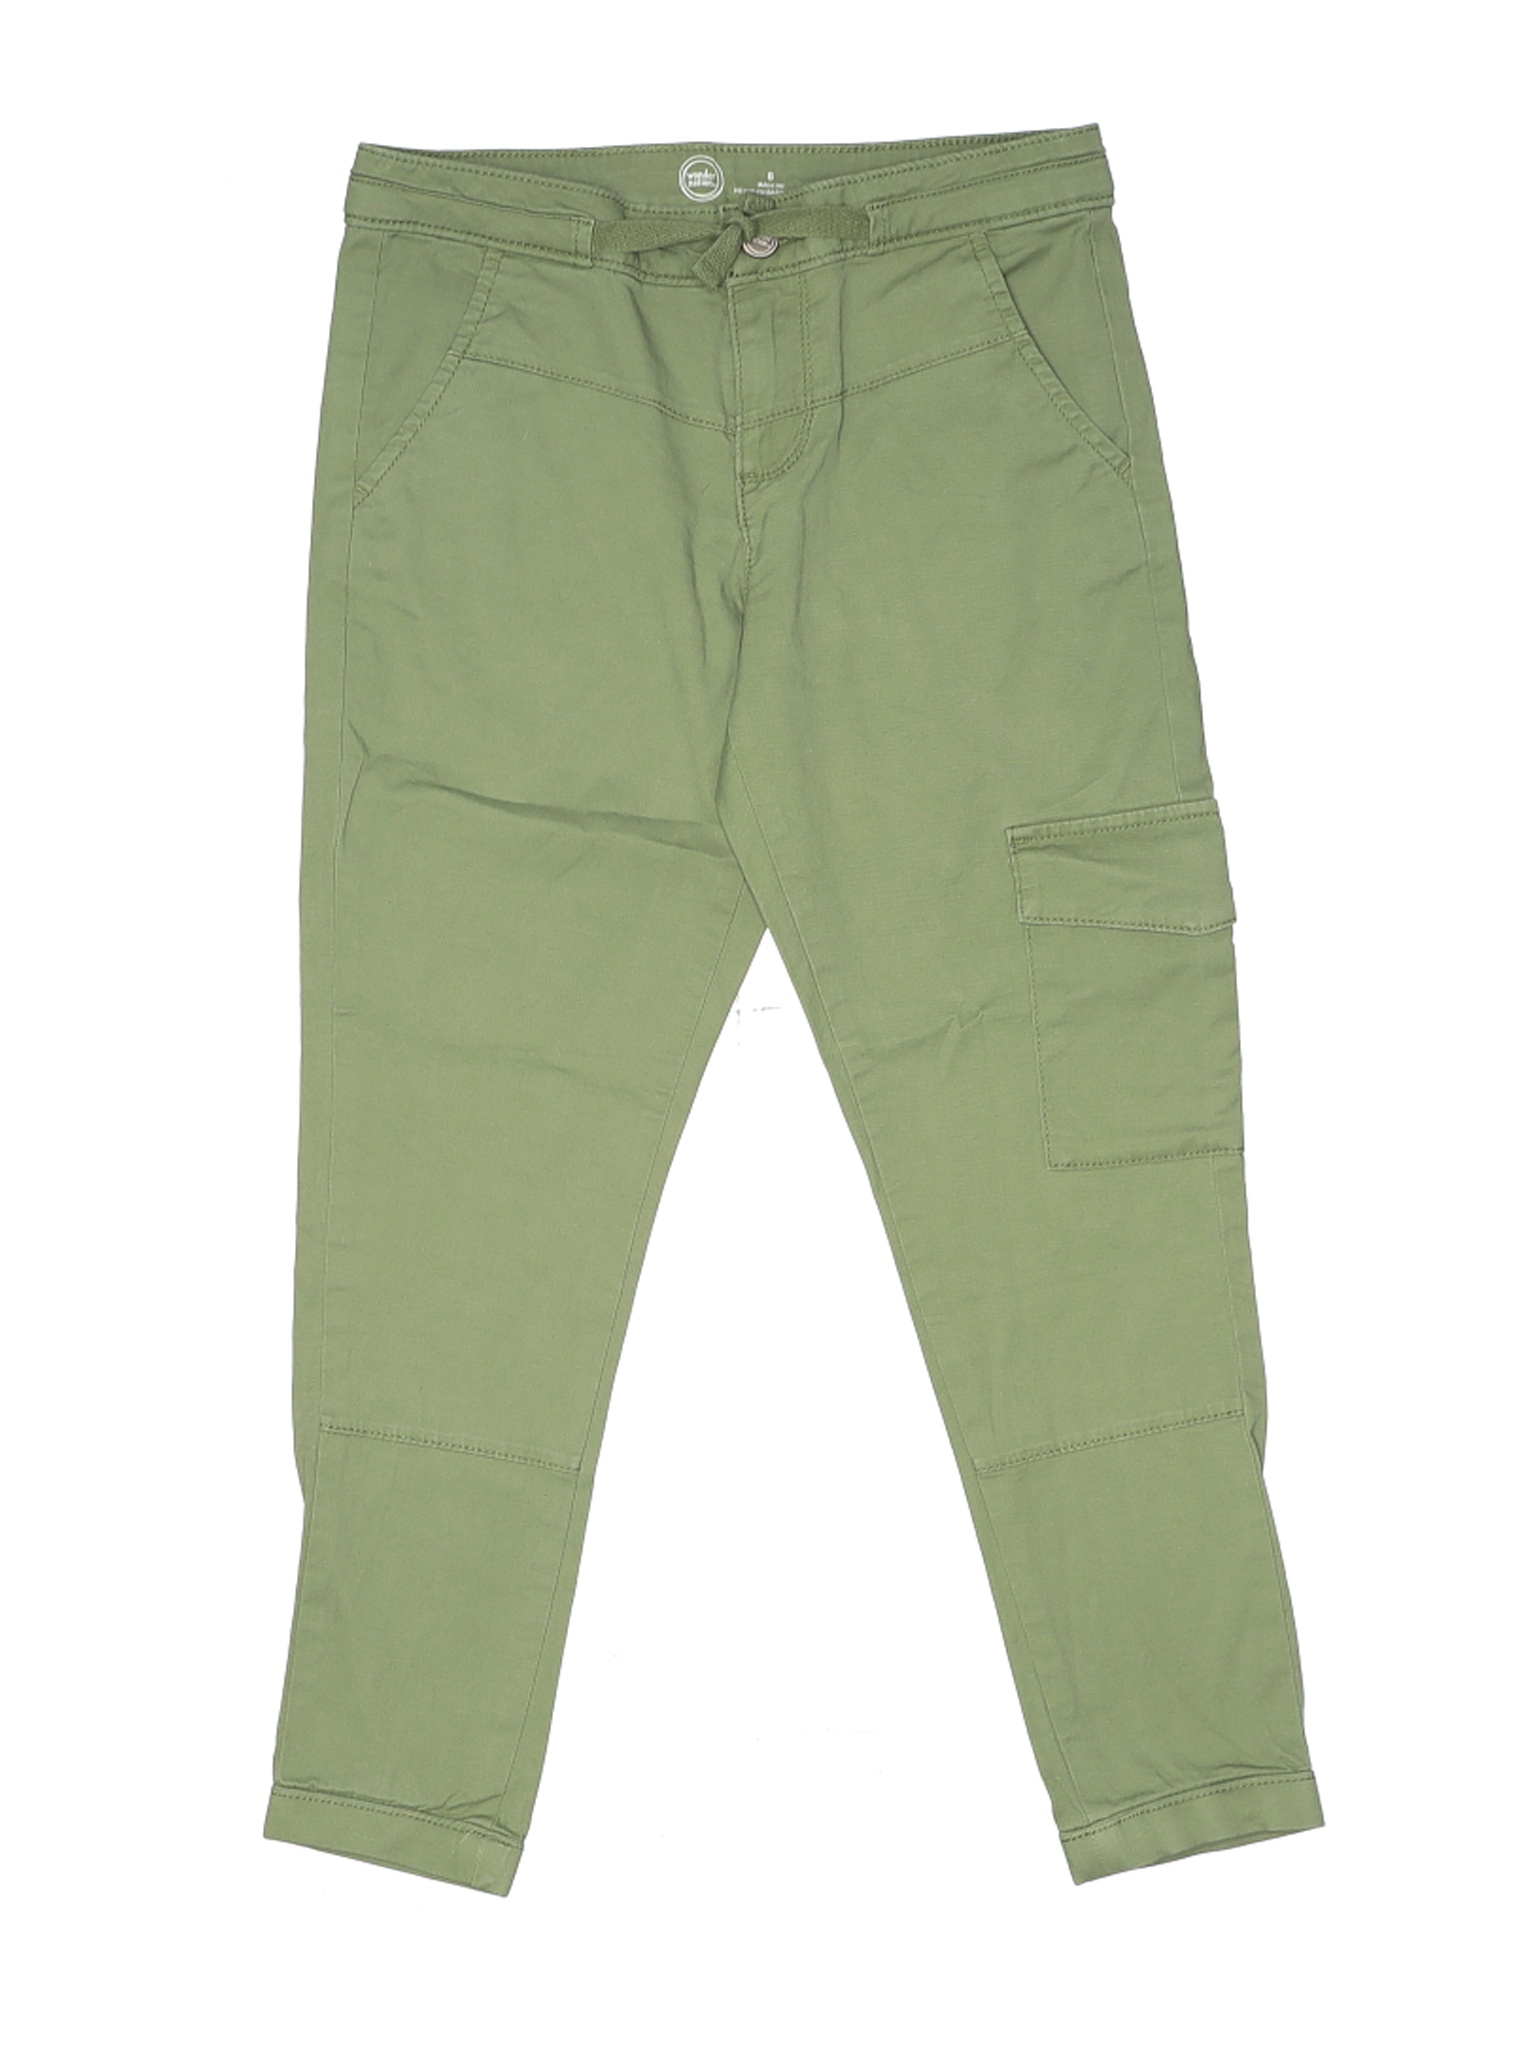 Wonder Nation Girls Green Cargo Pants 8 | eBay